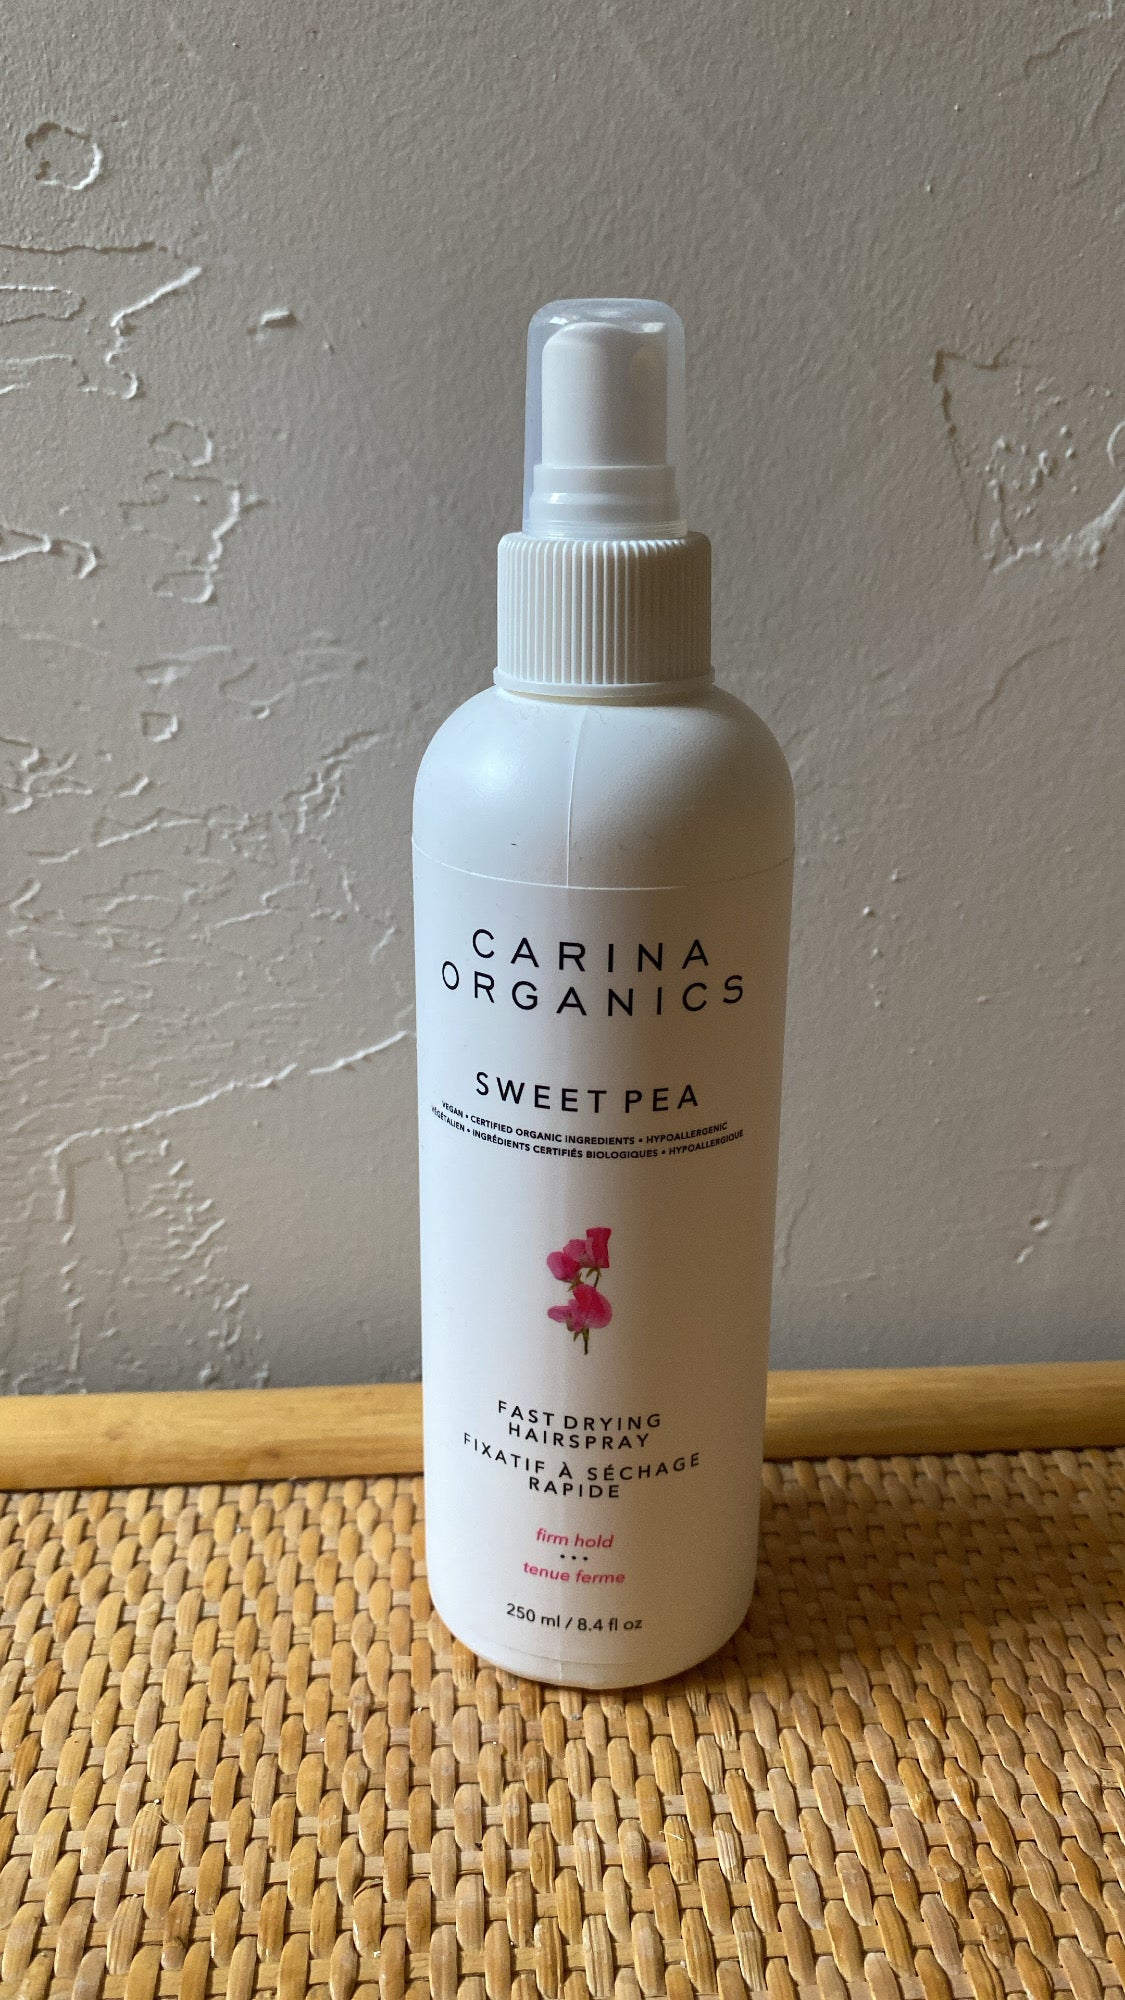 Hairspray | Carina Organics Sweet Pea, Fast Dry